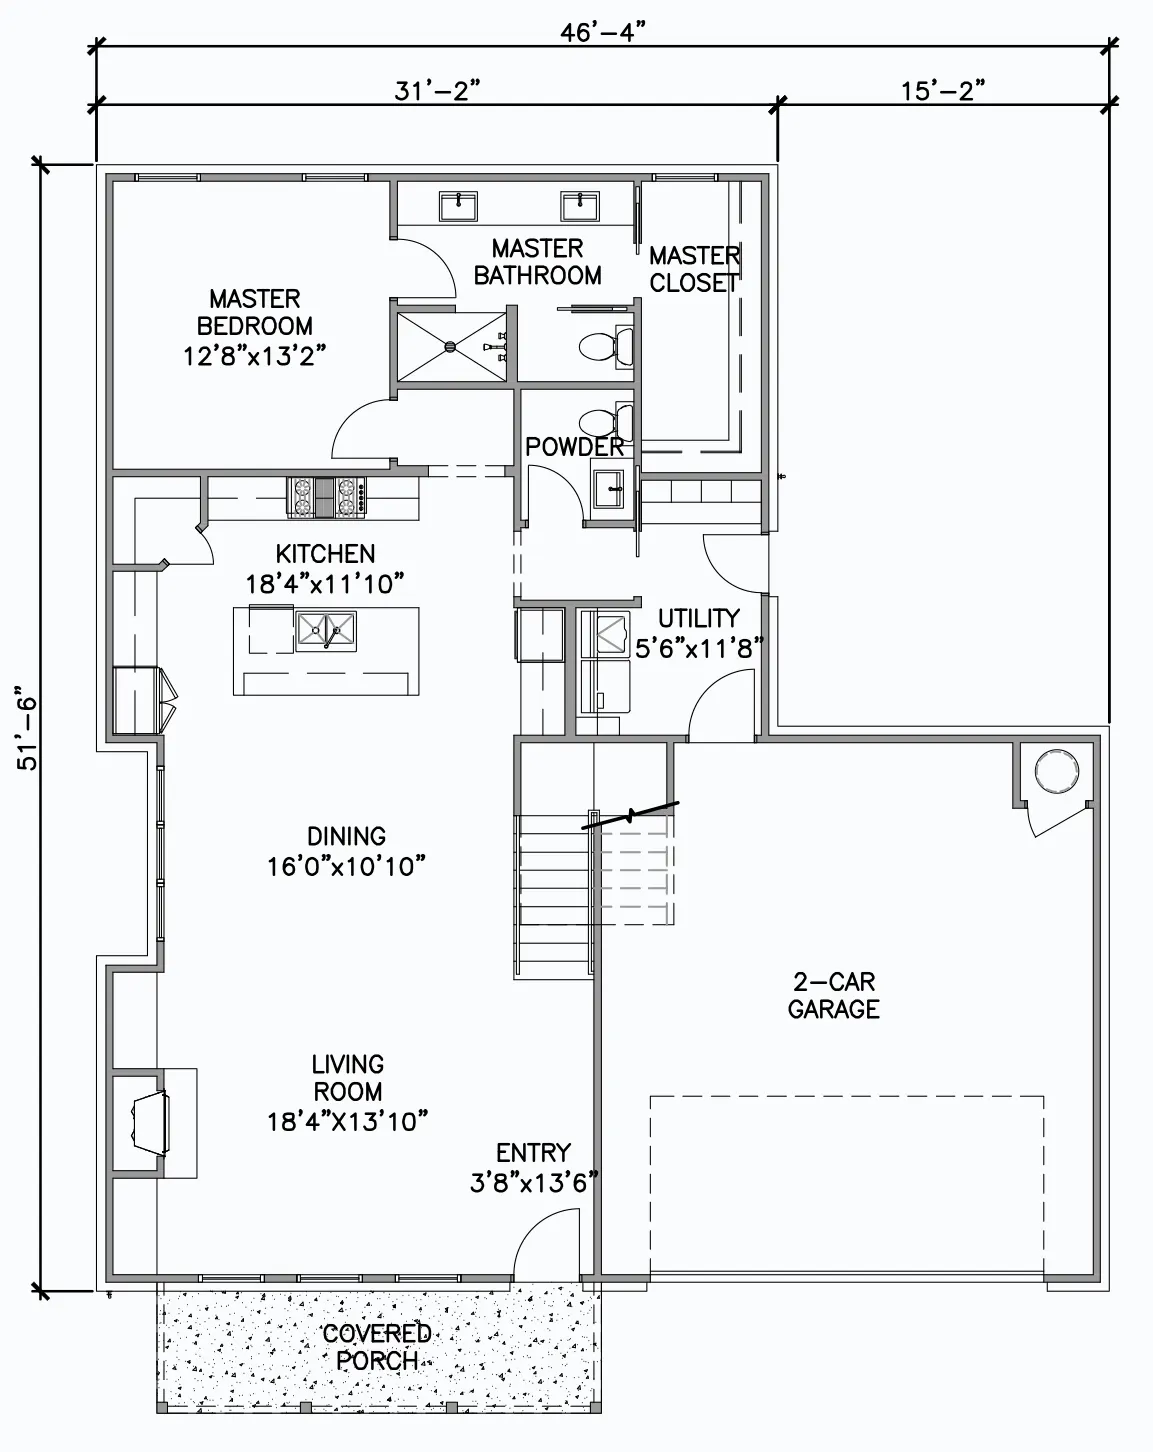 First Floor Savannah Floor Plan by Ruhl Construction